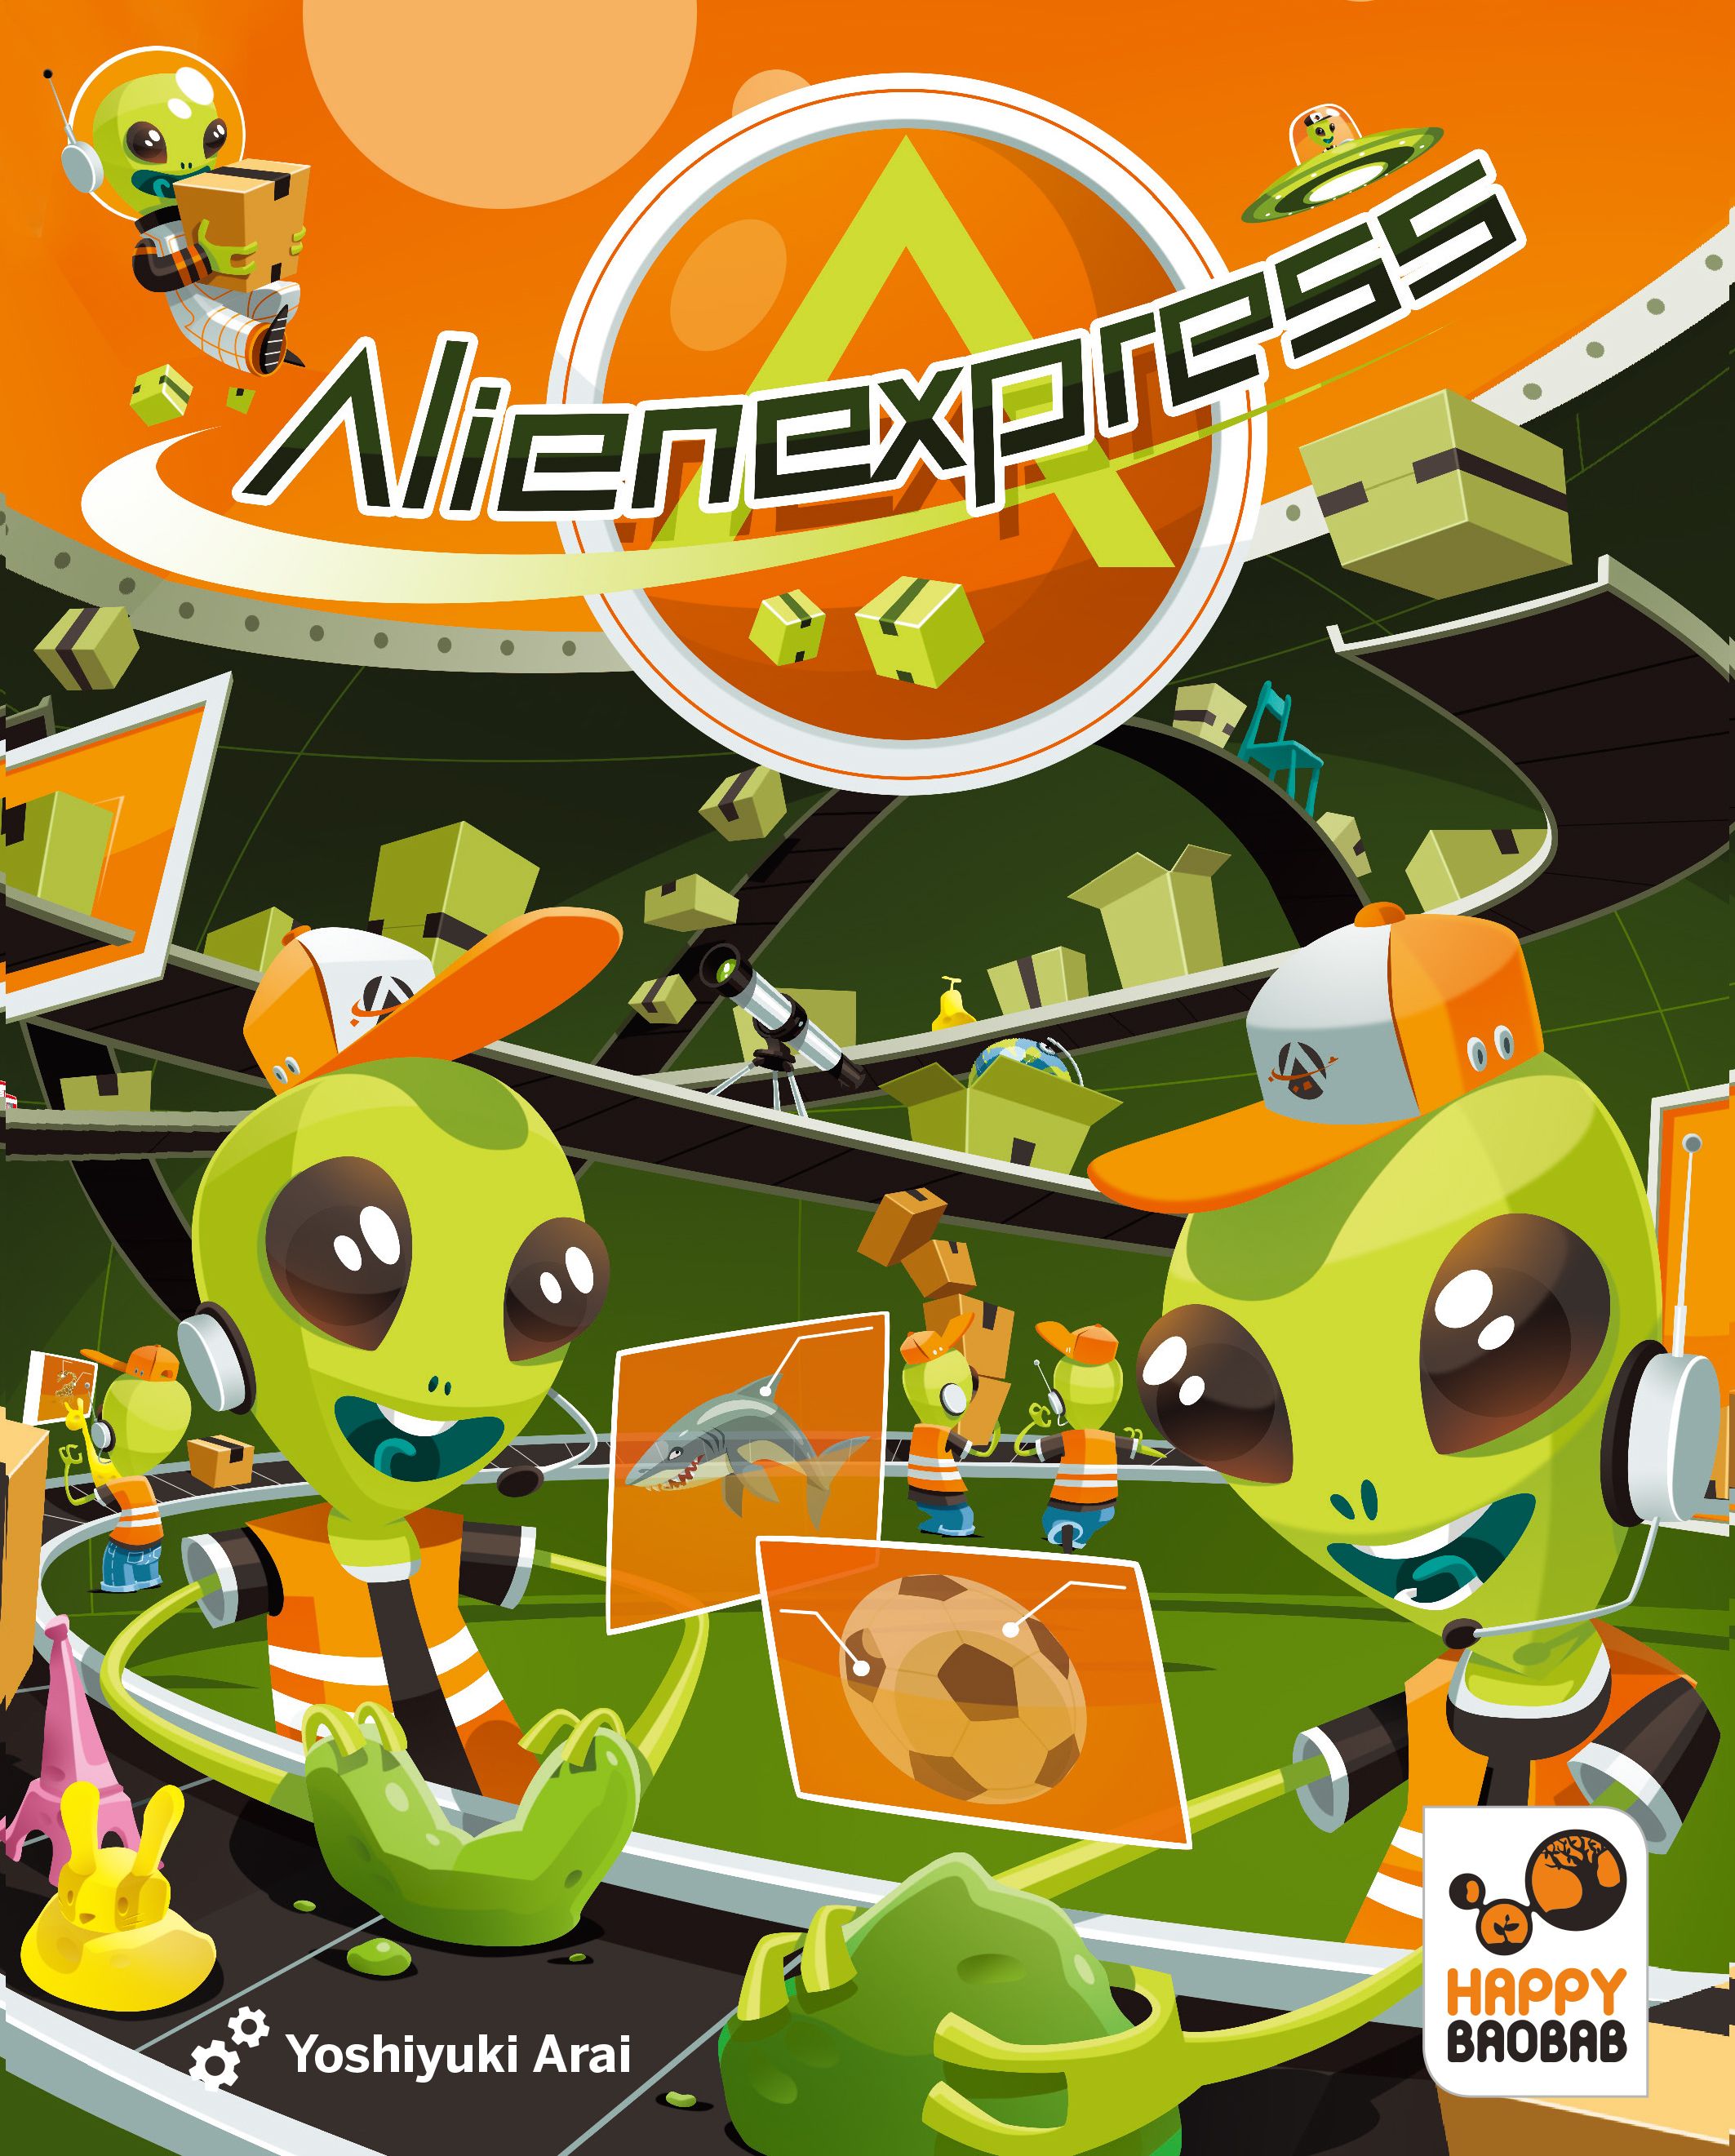 AlienExpress